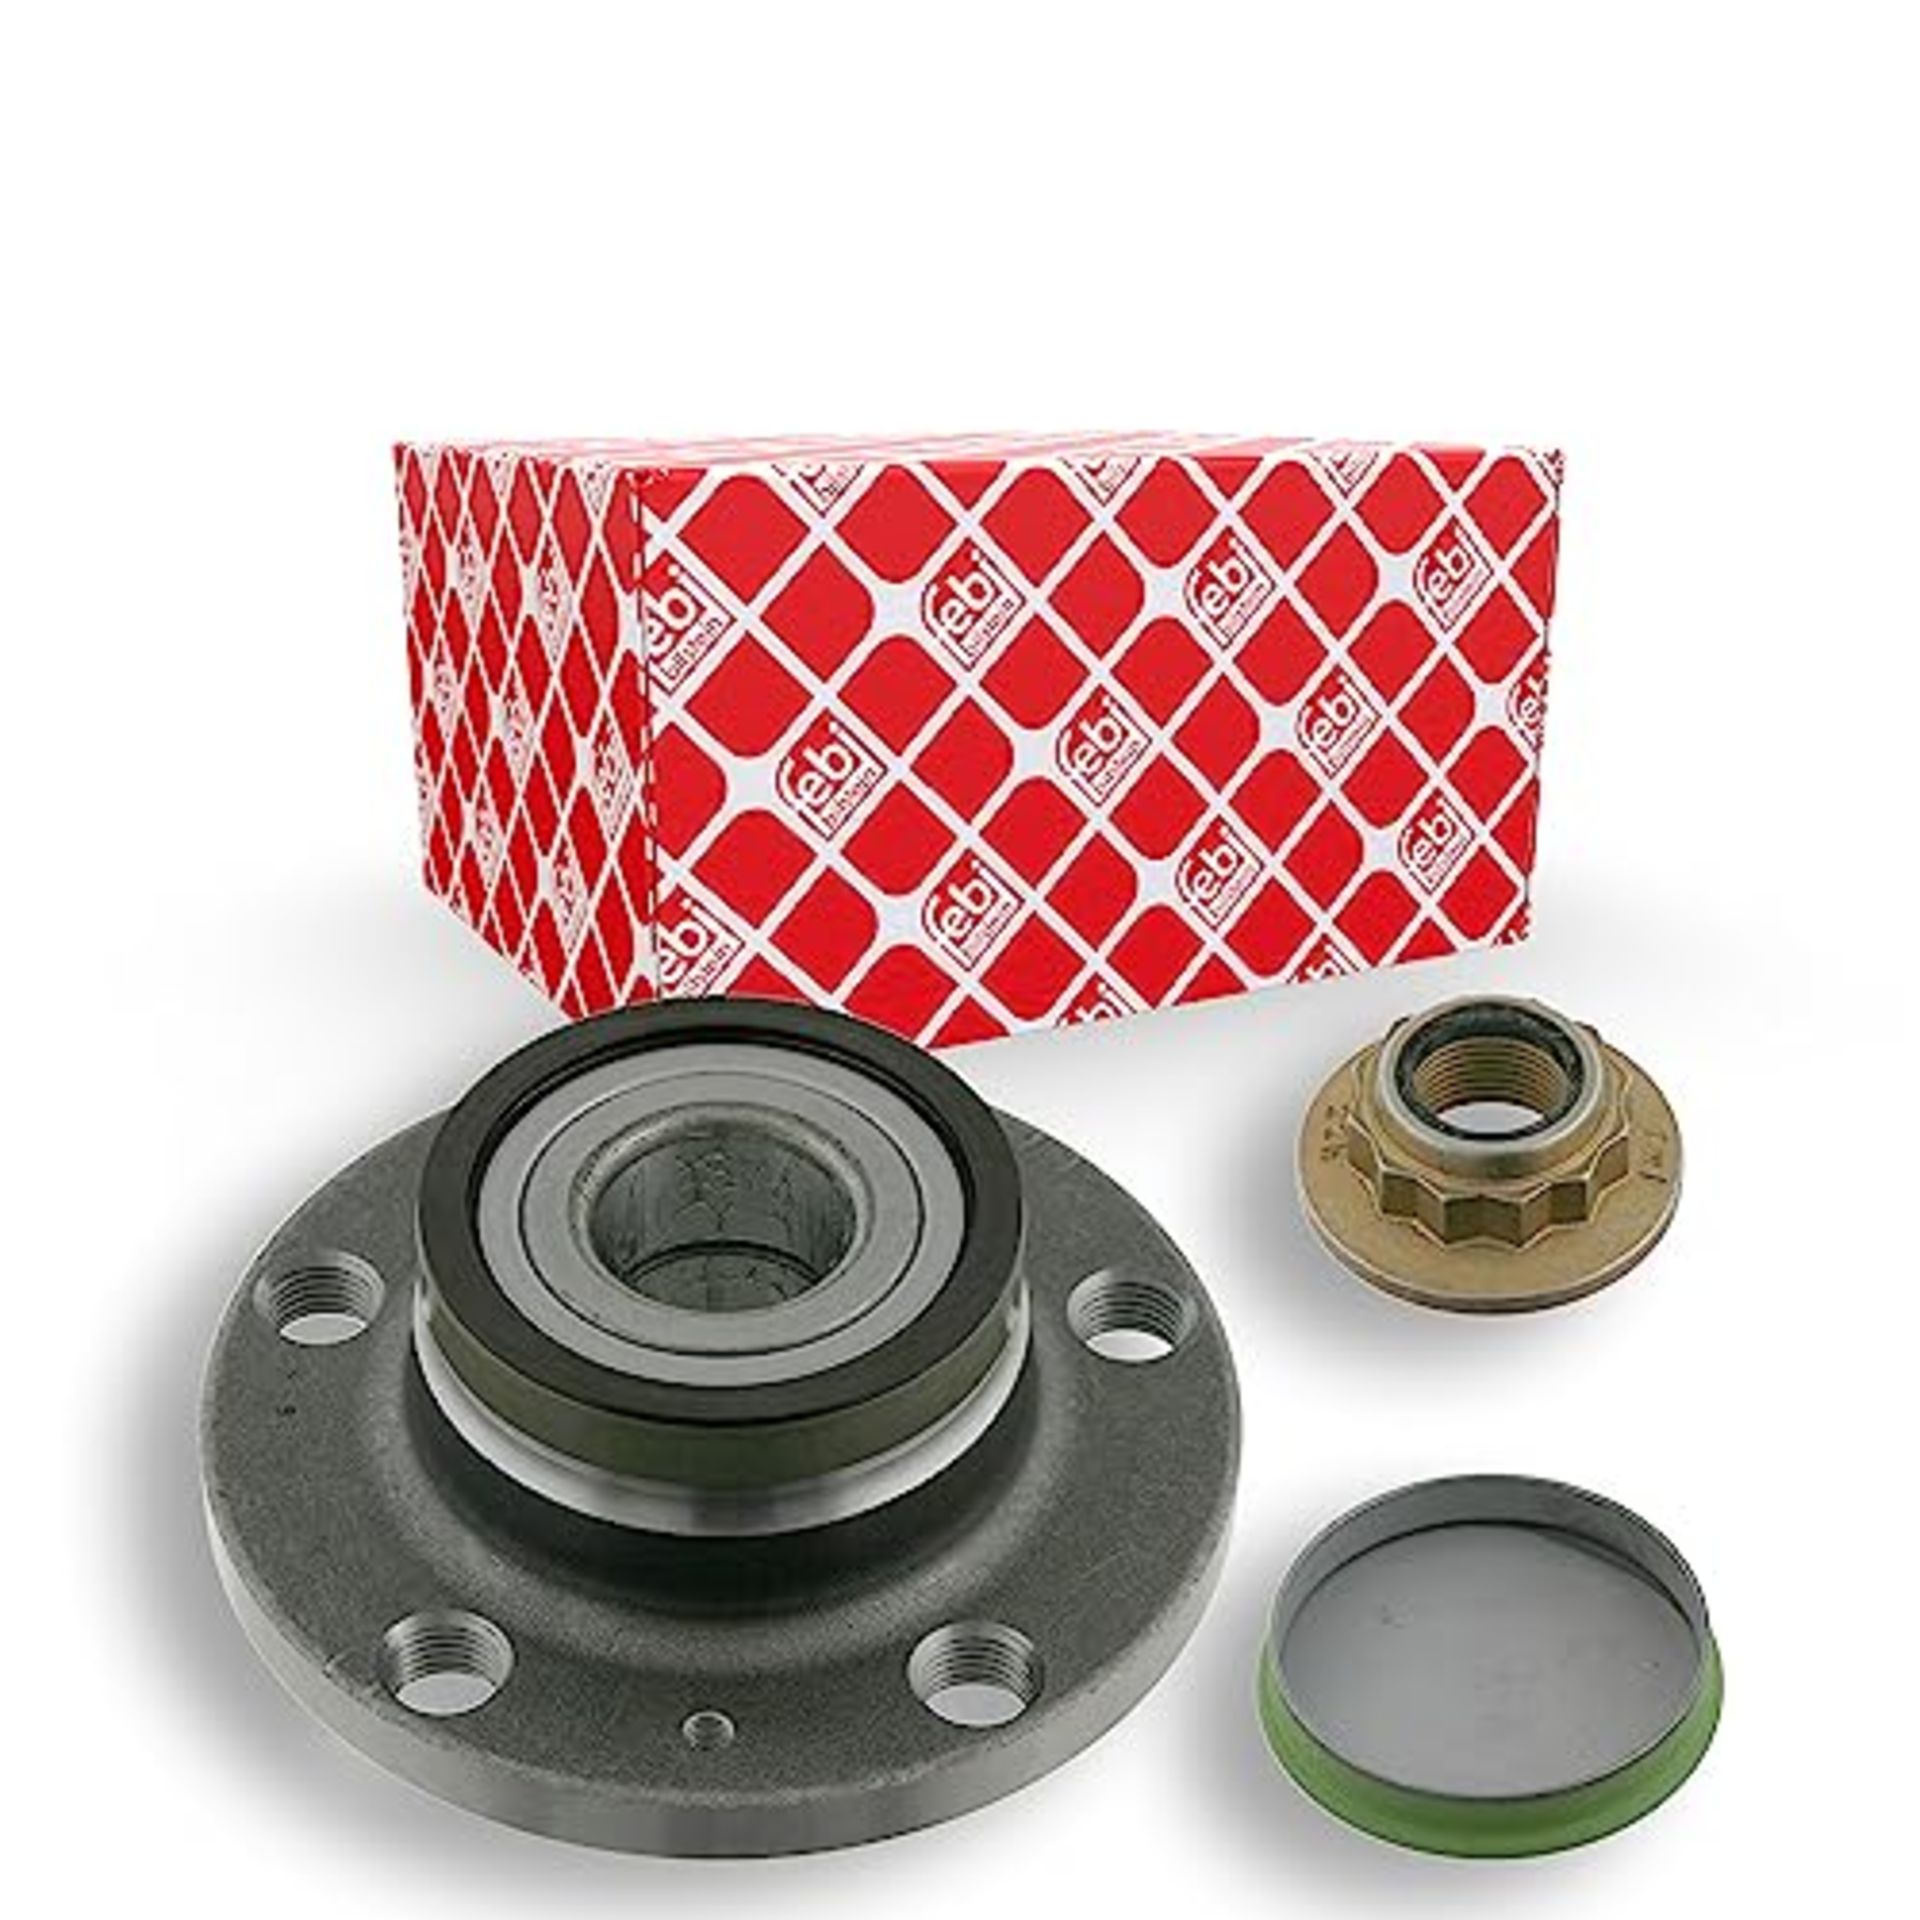 febi bilstein 24224 Wheel Bearing Kit with wheel hub, castle nut and dust cap, pack of